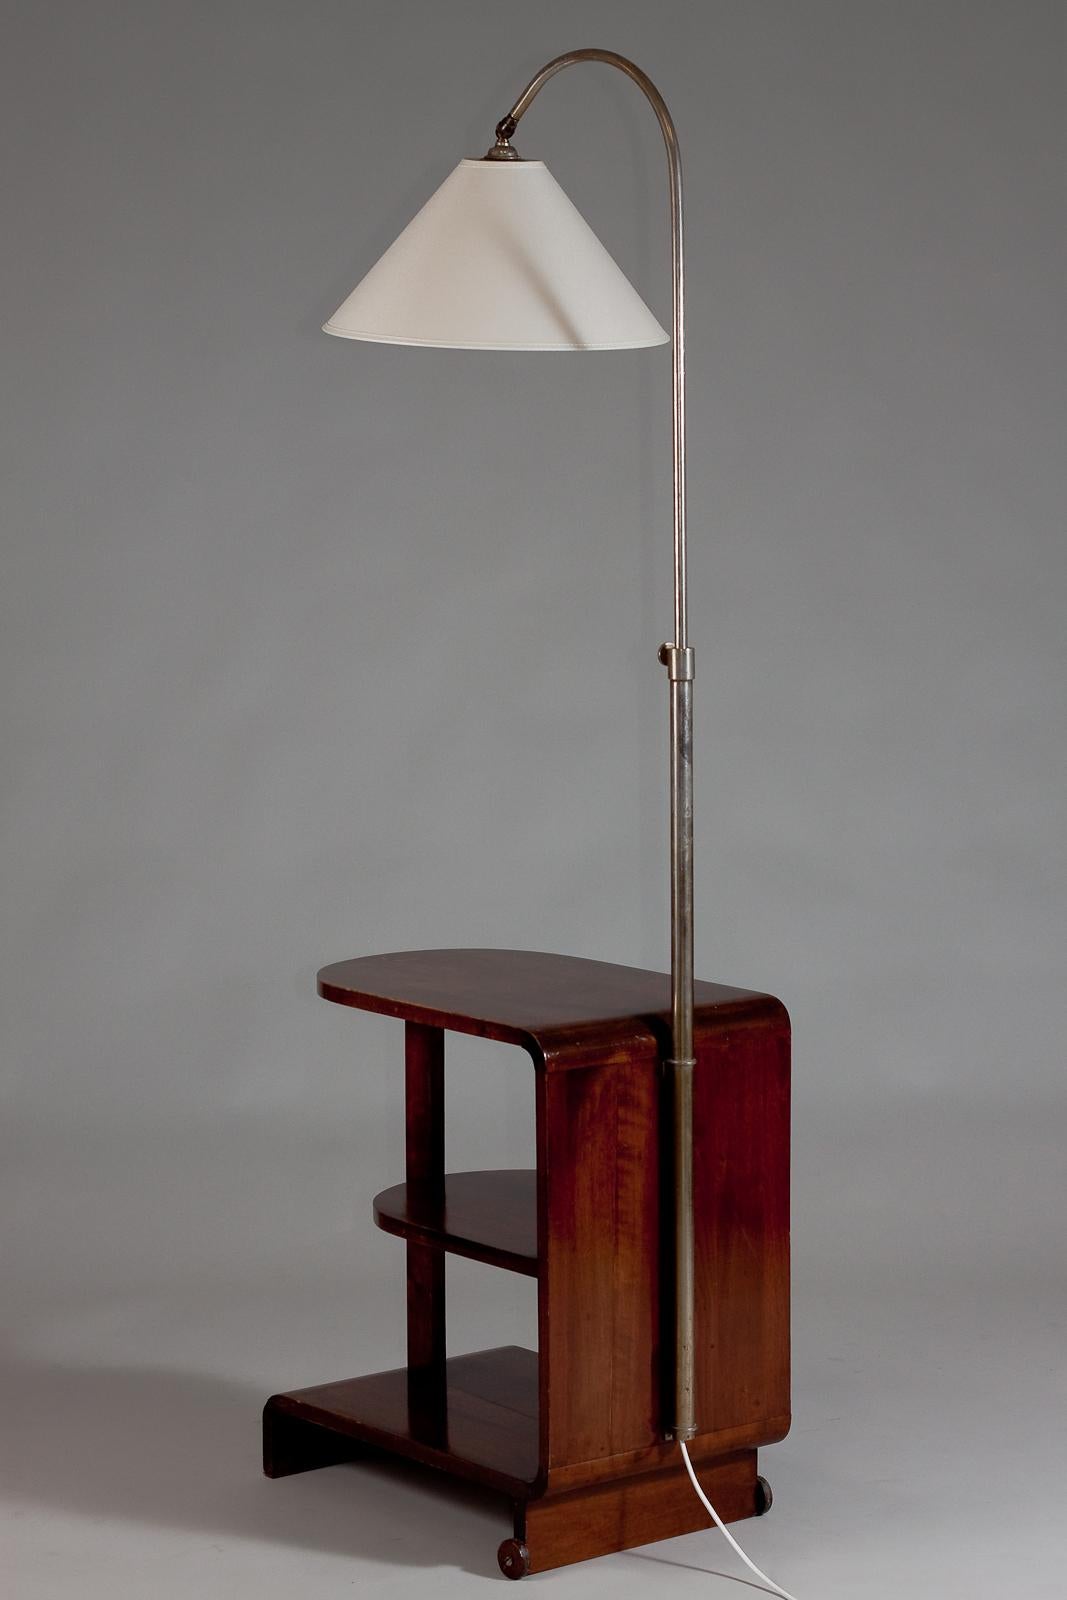 Scandinavian Modern Maija Heikinheimo, 1930's side table with a lamp For Sale